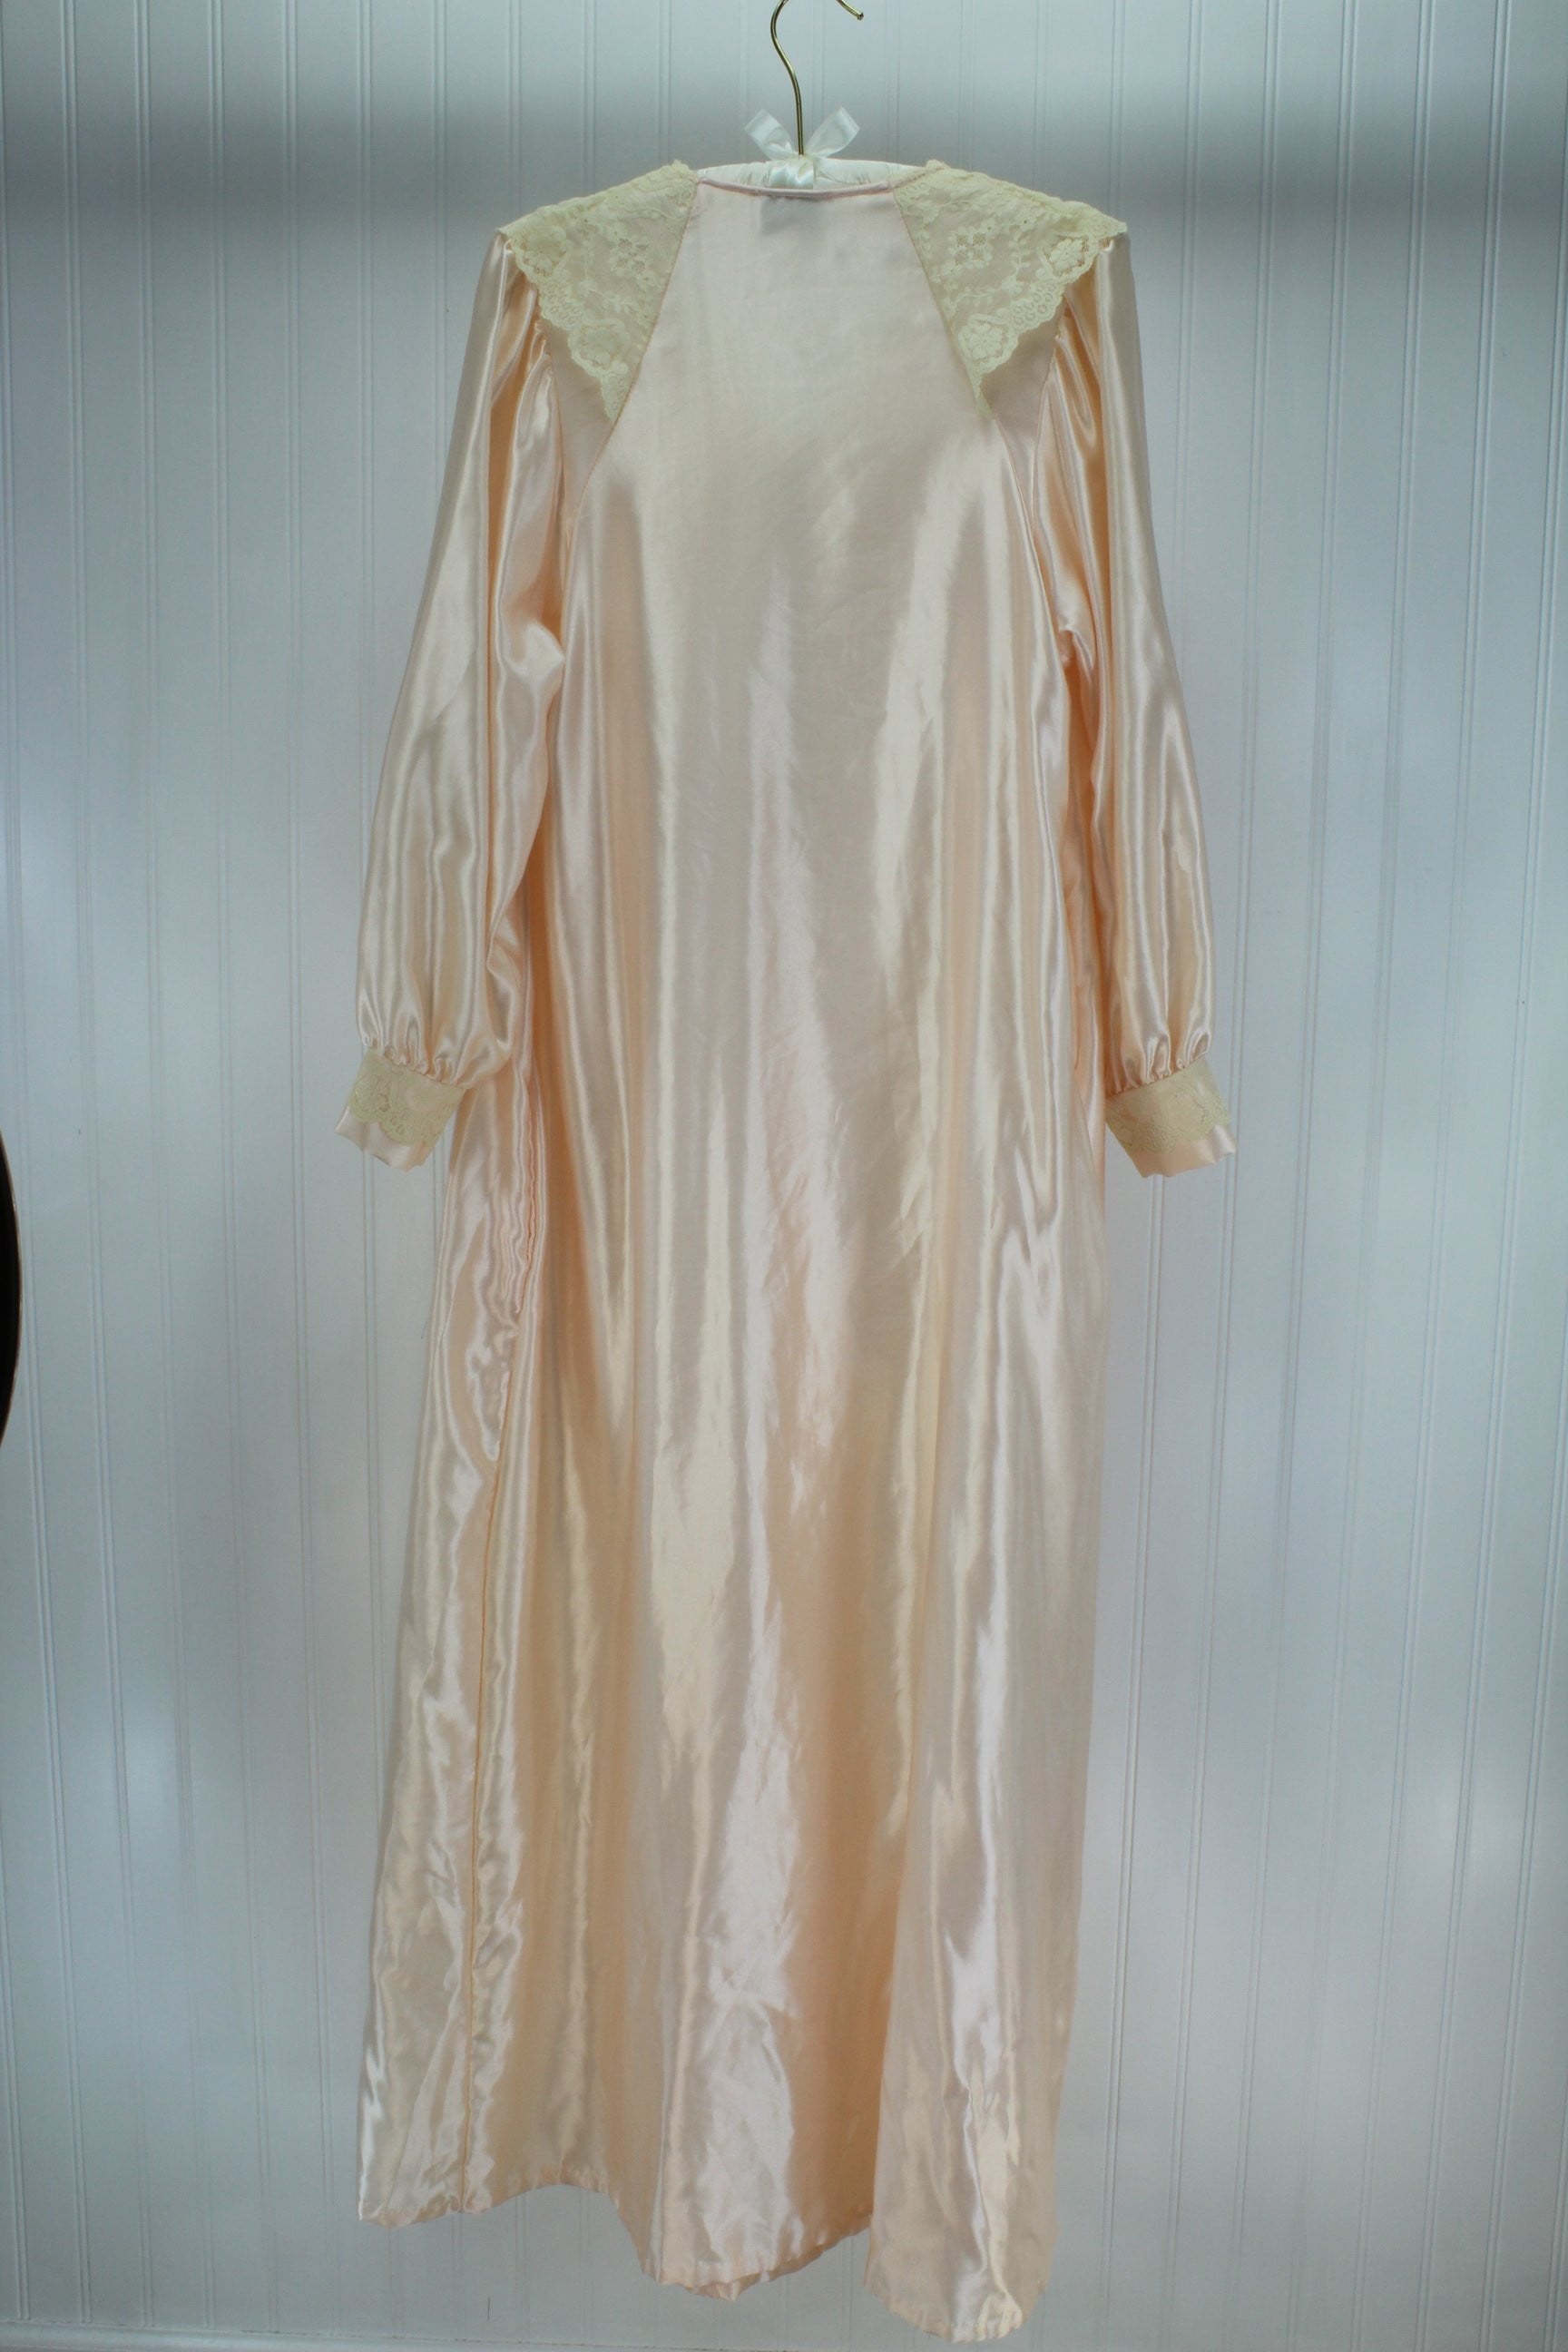 Donna Richard Nightgown Blush Pink Polyester Cotton Lace Collar Size Medium sweet